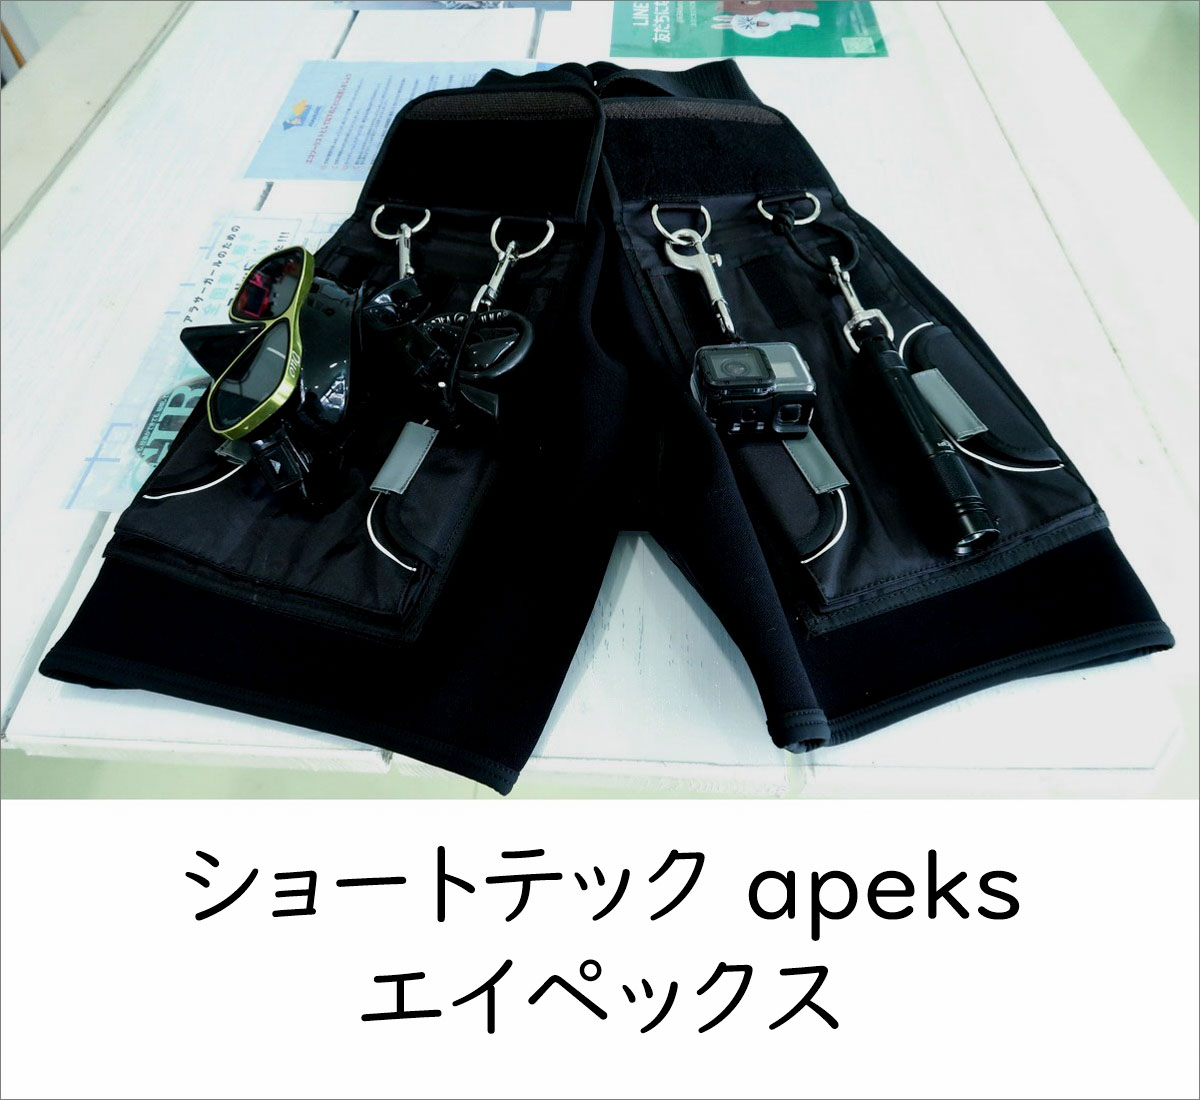 Apeks(エイペックス)ダイビング器材 - 国内の正規ディーラー